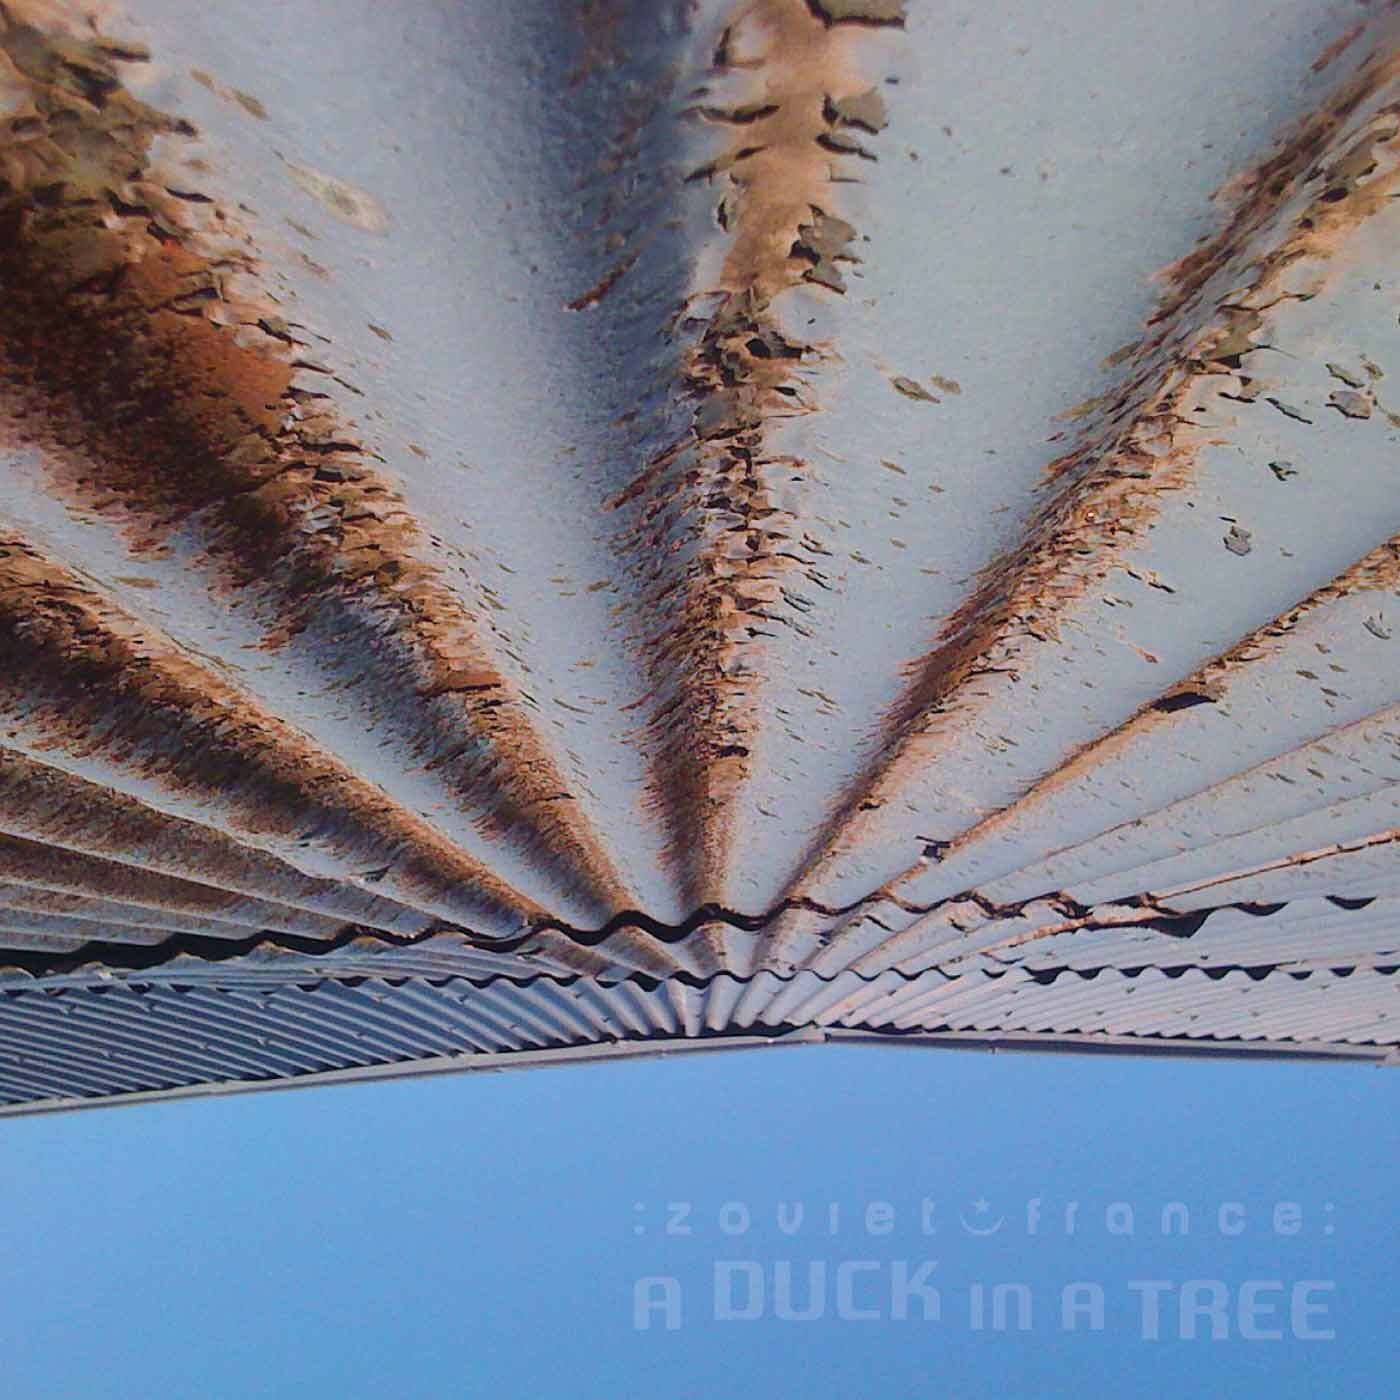 A-Duck-in-a-Tree-2015-02-14-_-The-Raisin